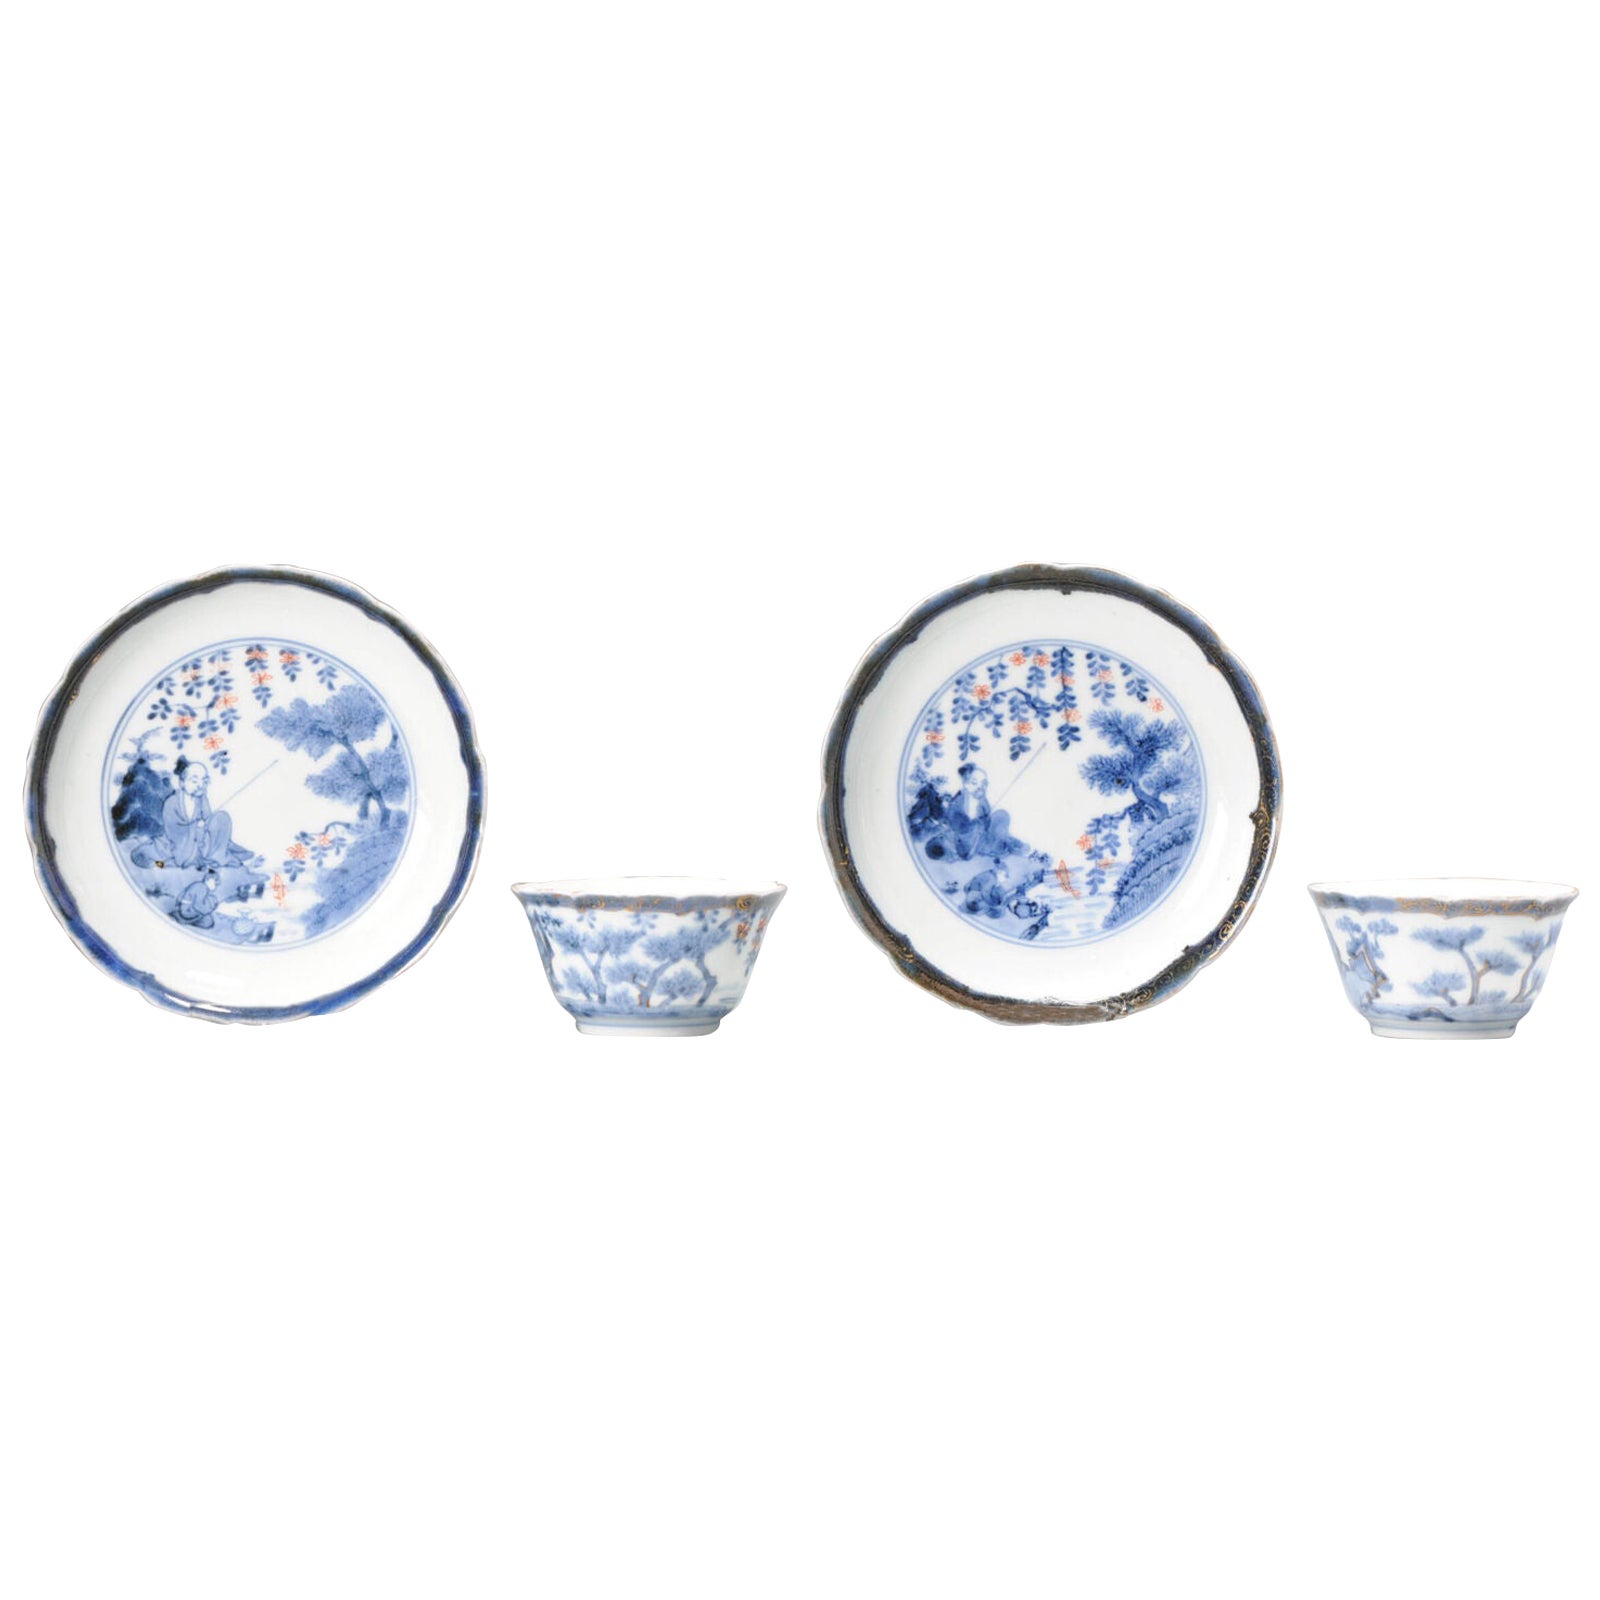 Antique Japanese Arita Frederik Van Frytom Style Porcelain Tea Cups, ca 1700 For Sale